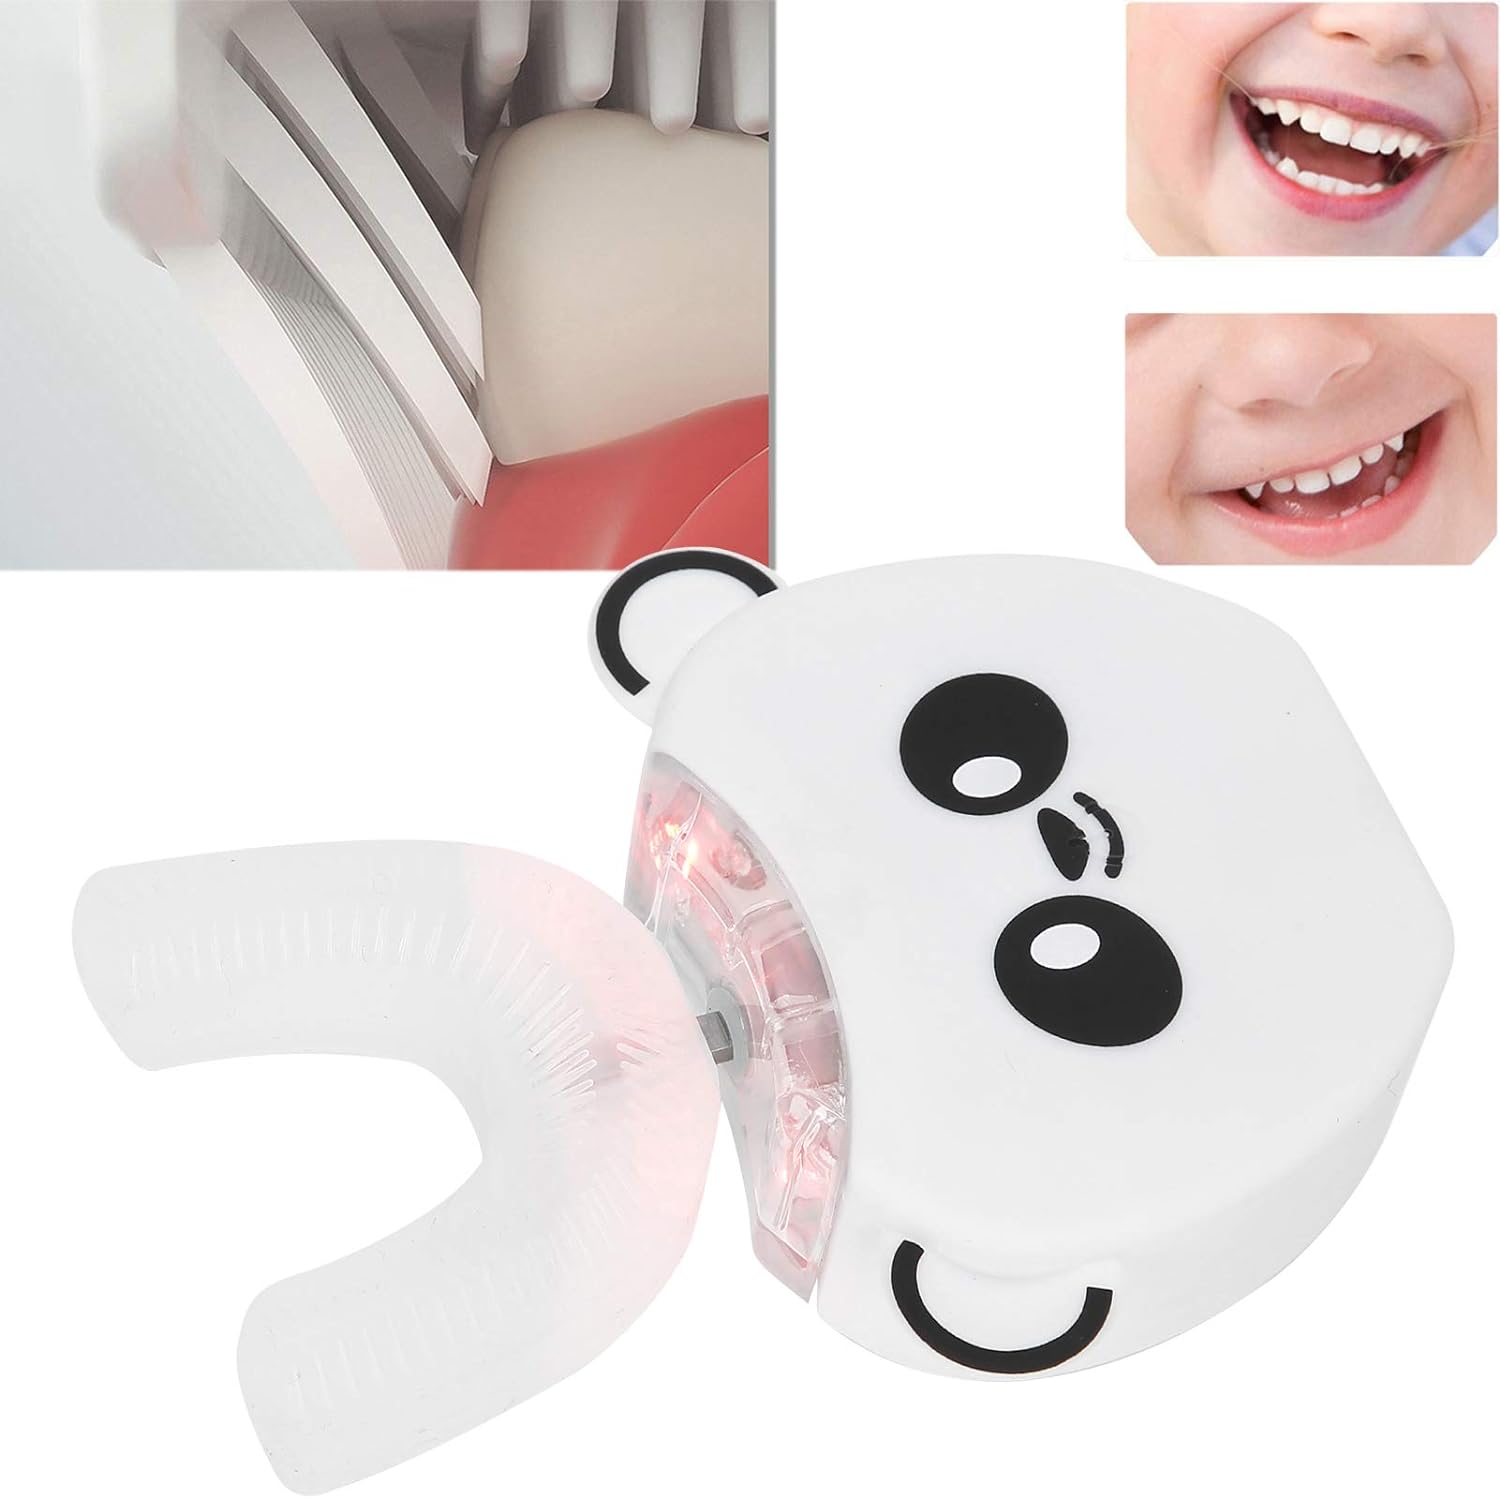 U-Babi electric toothbrush